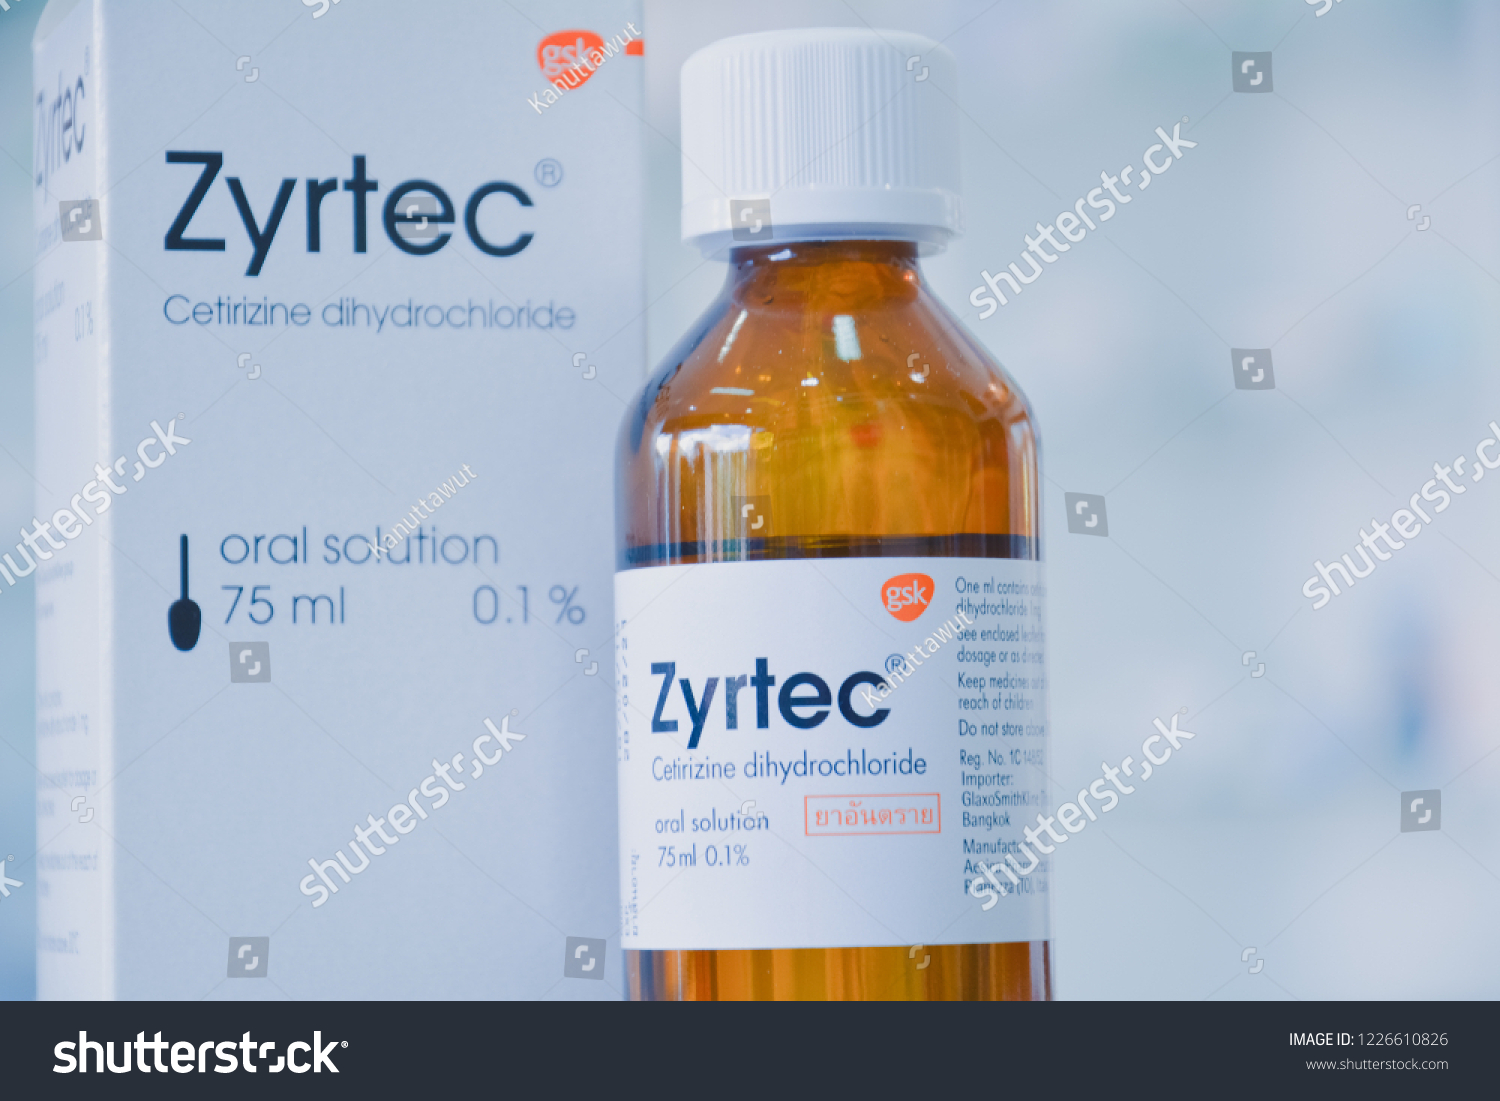 Cetirizine dihydrochloride zyrtec The Zyrtec